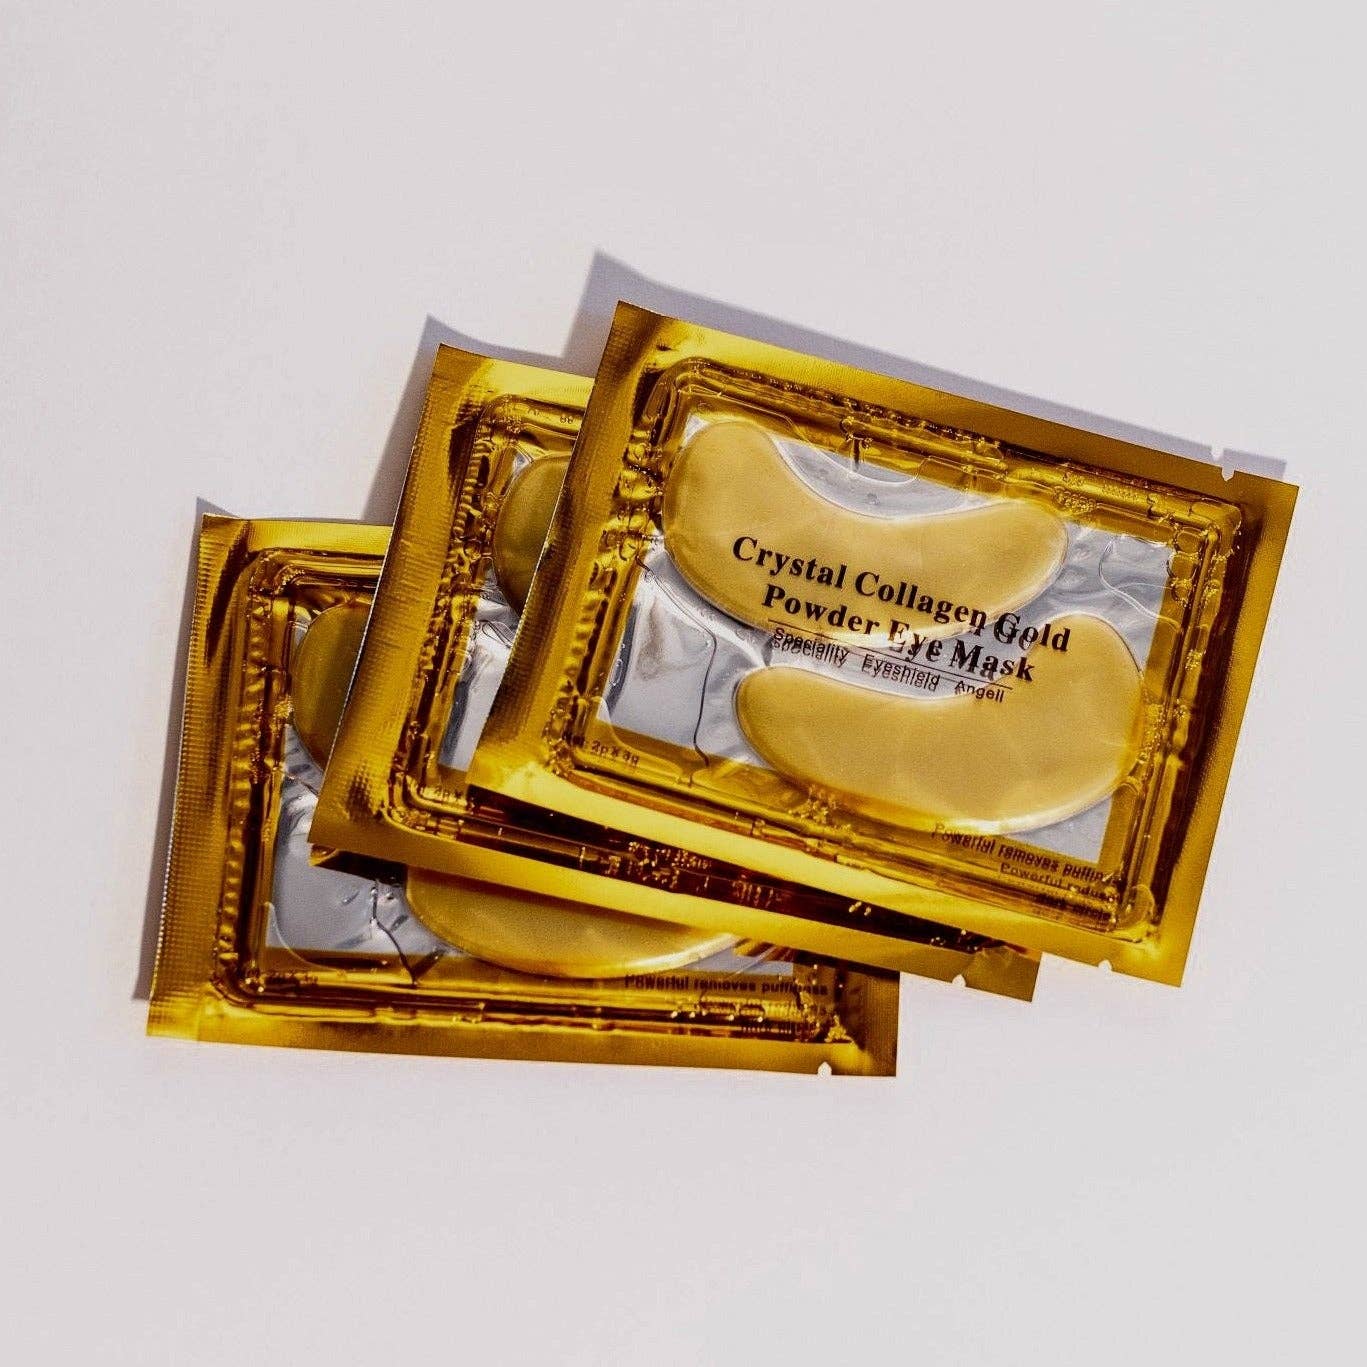 Crystal Collagen Gold Powder Eye Mask in gold packaging 